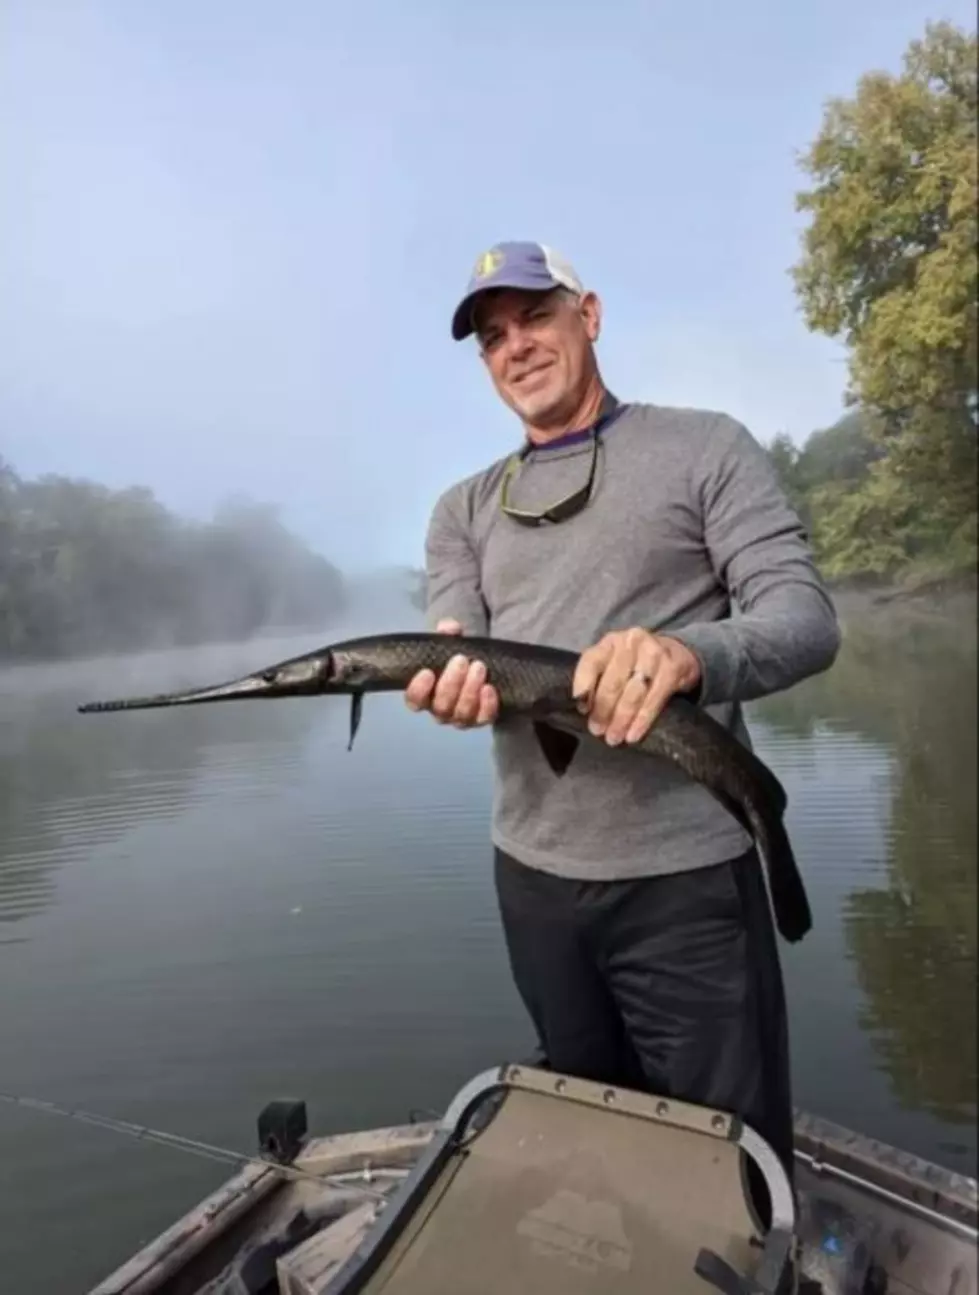 Louisiana Man Catches Rare Black Fish in Tennessee River